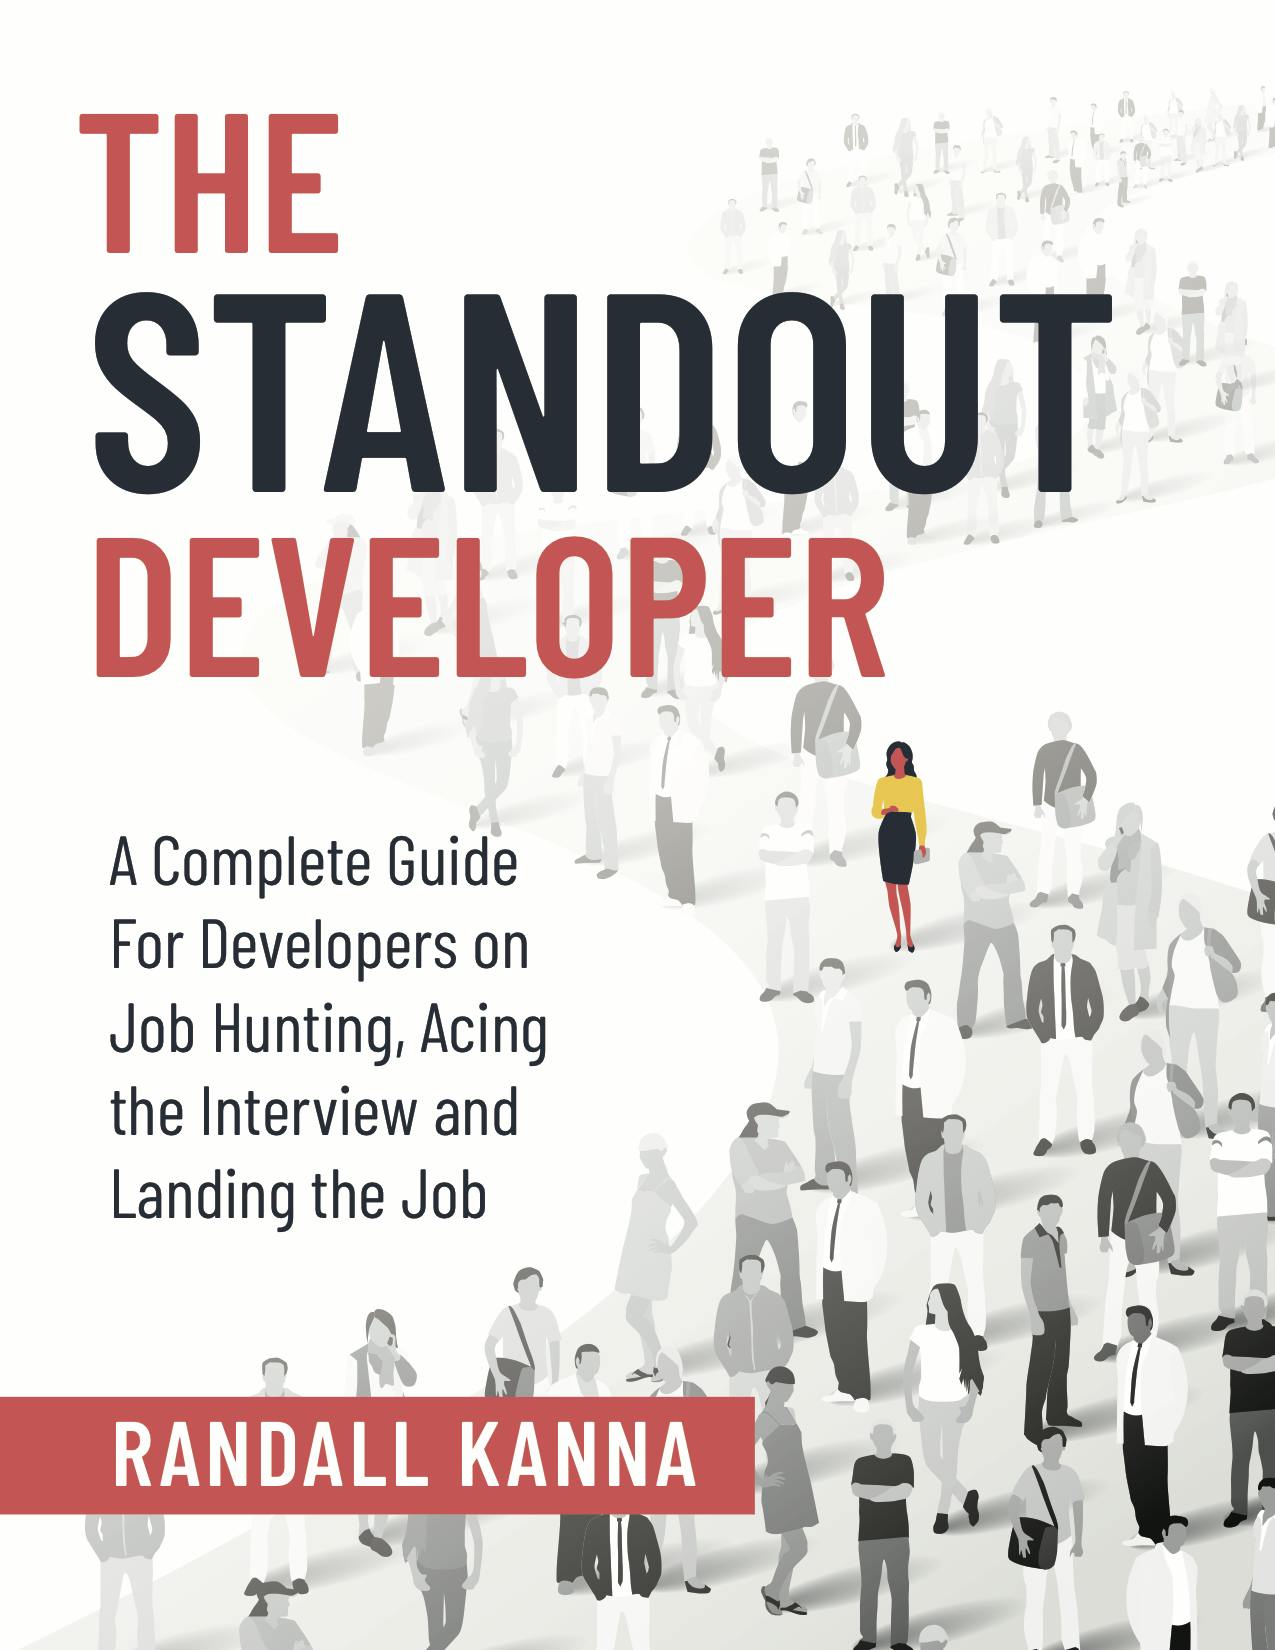 The Standout Developer book